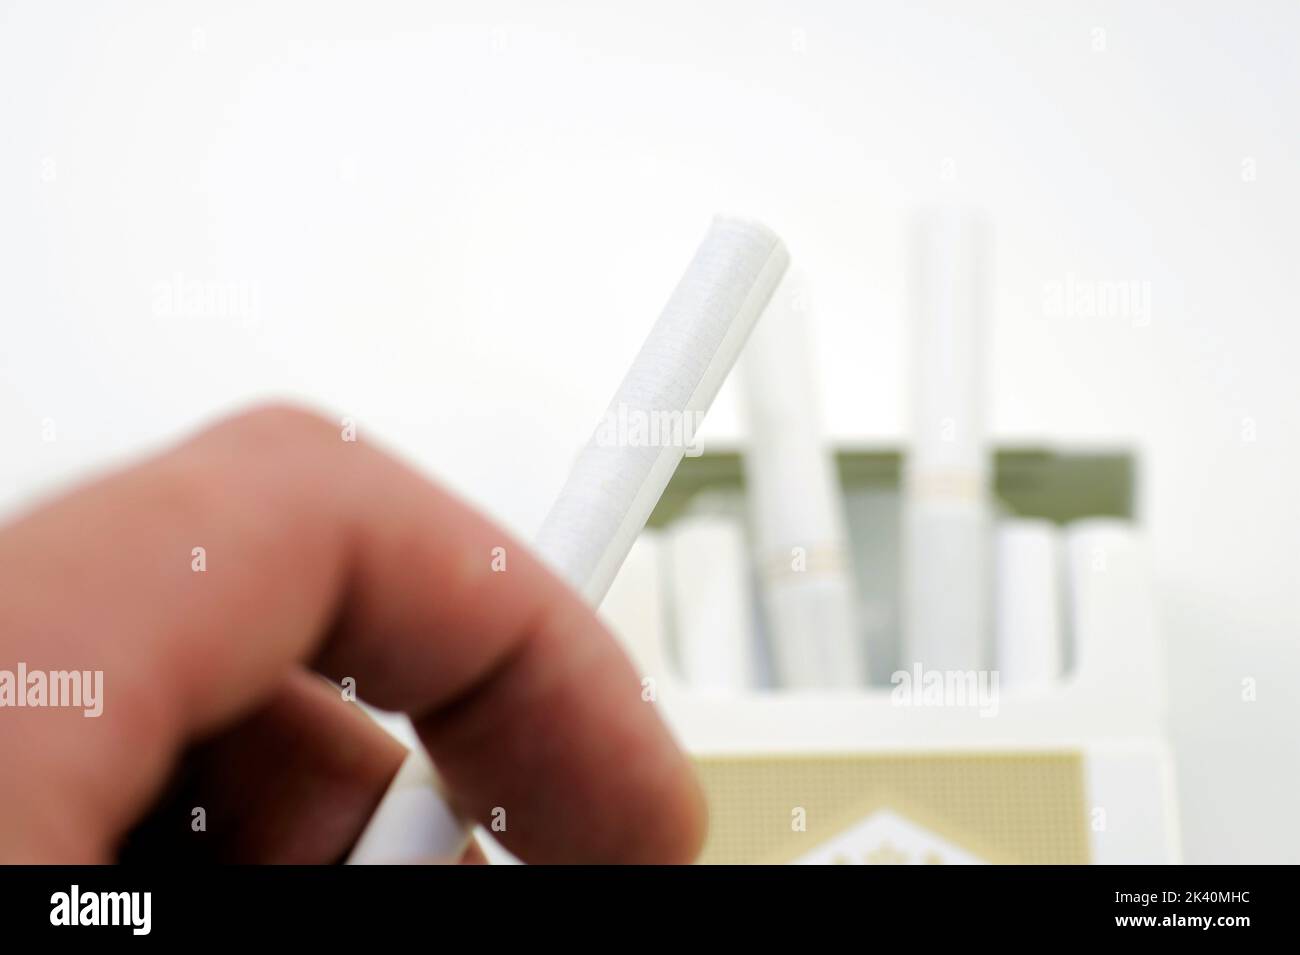 Marlboro cigarettes pack on white background stock photo Stock Photo